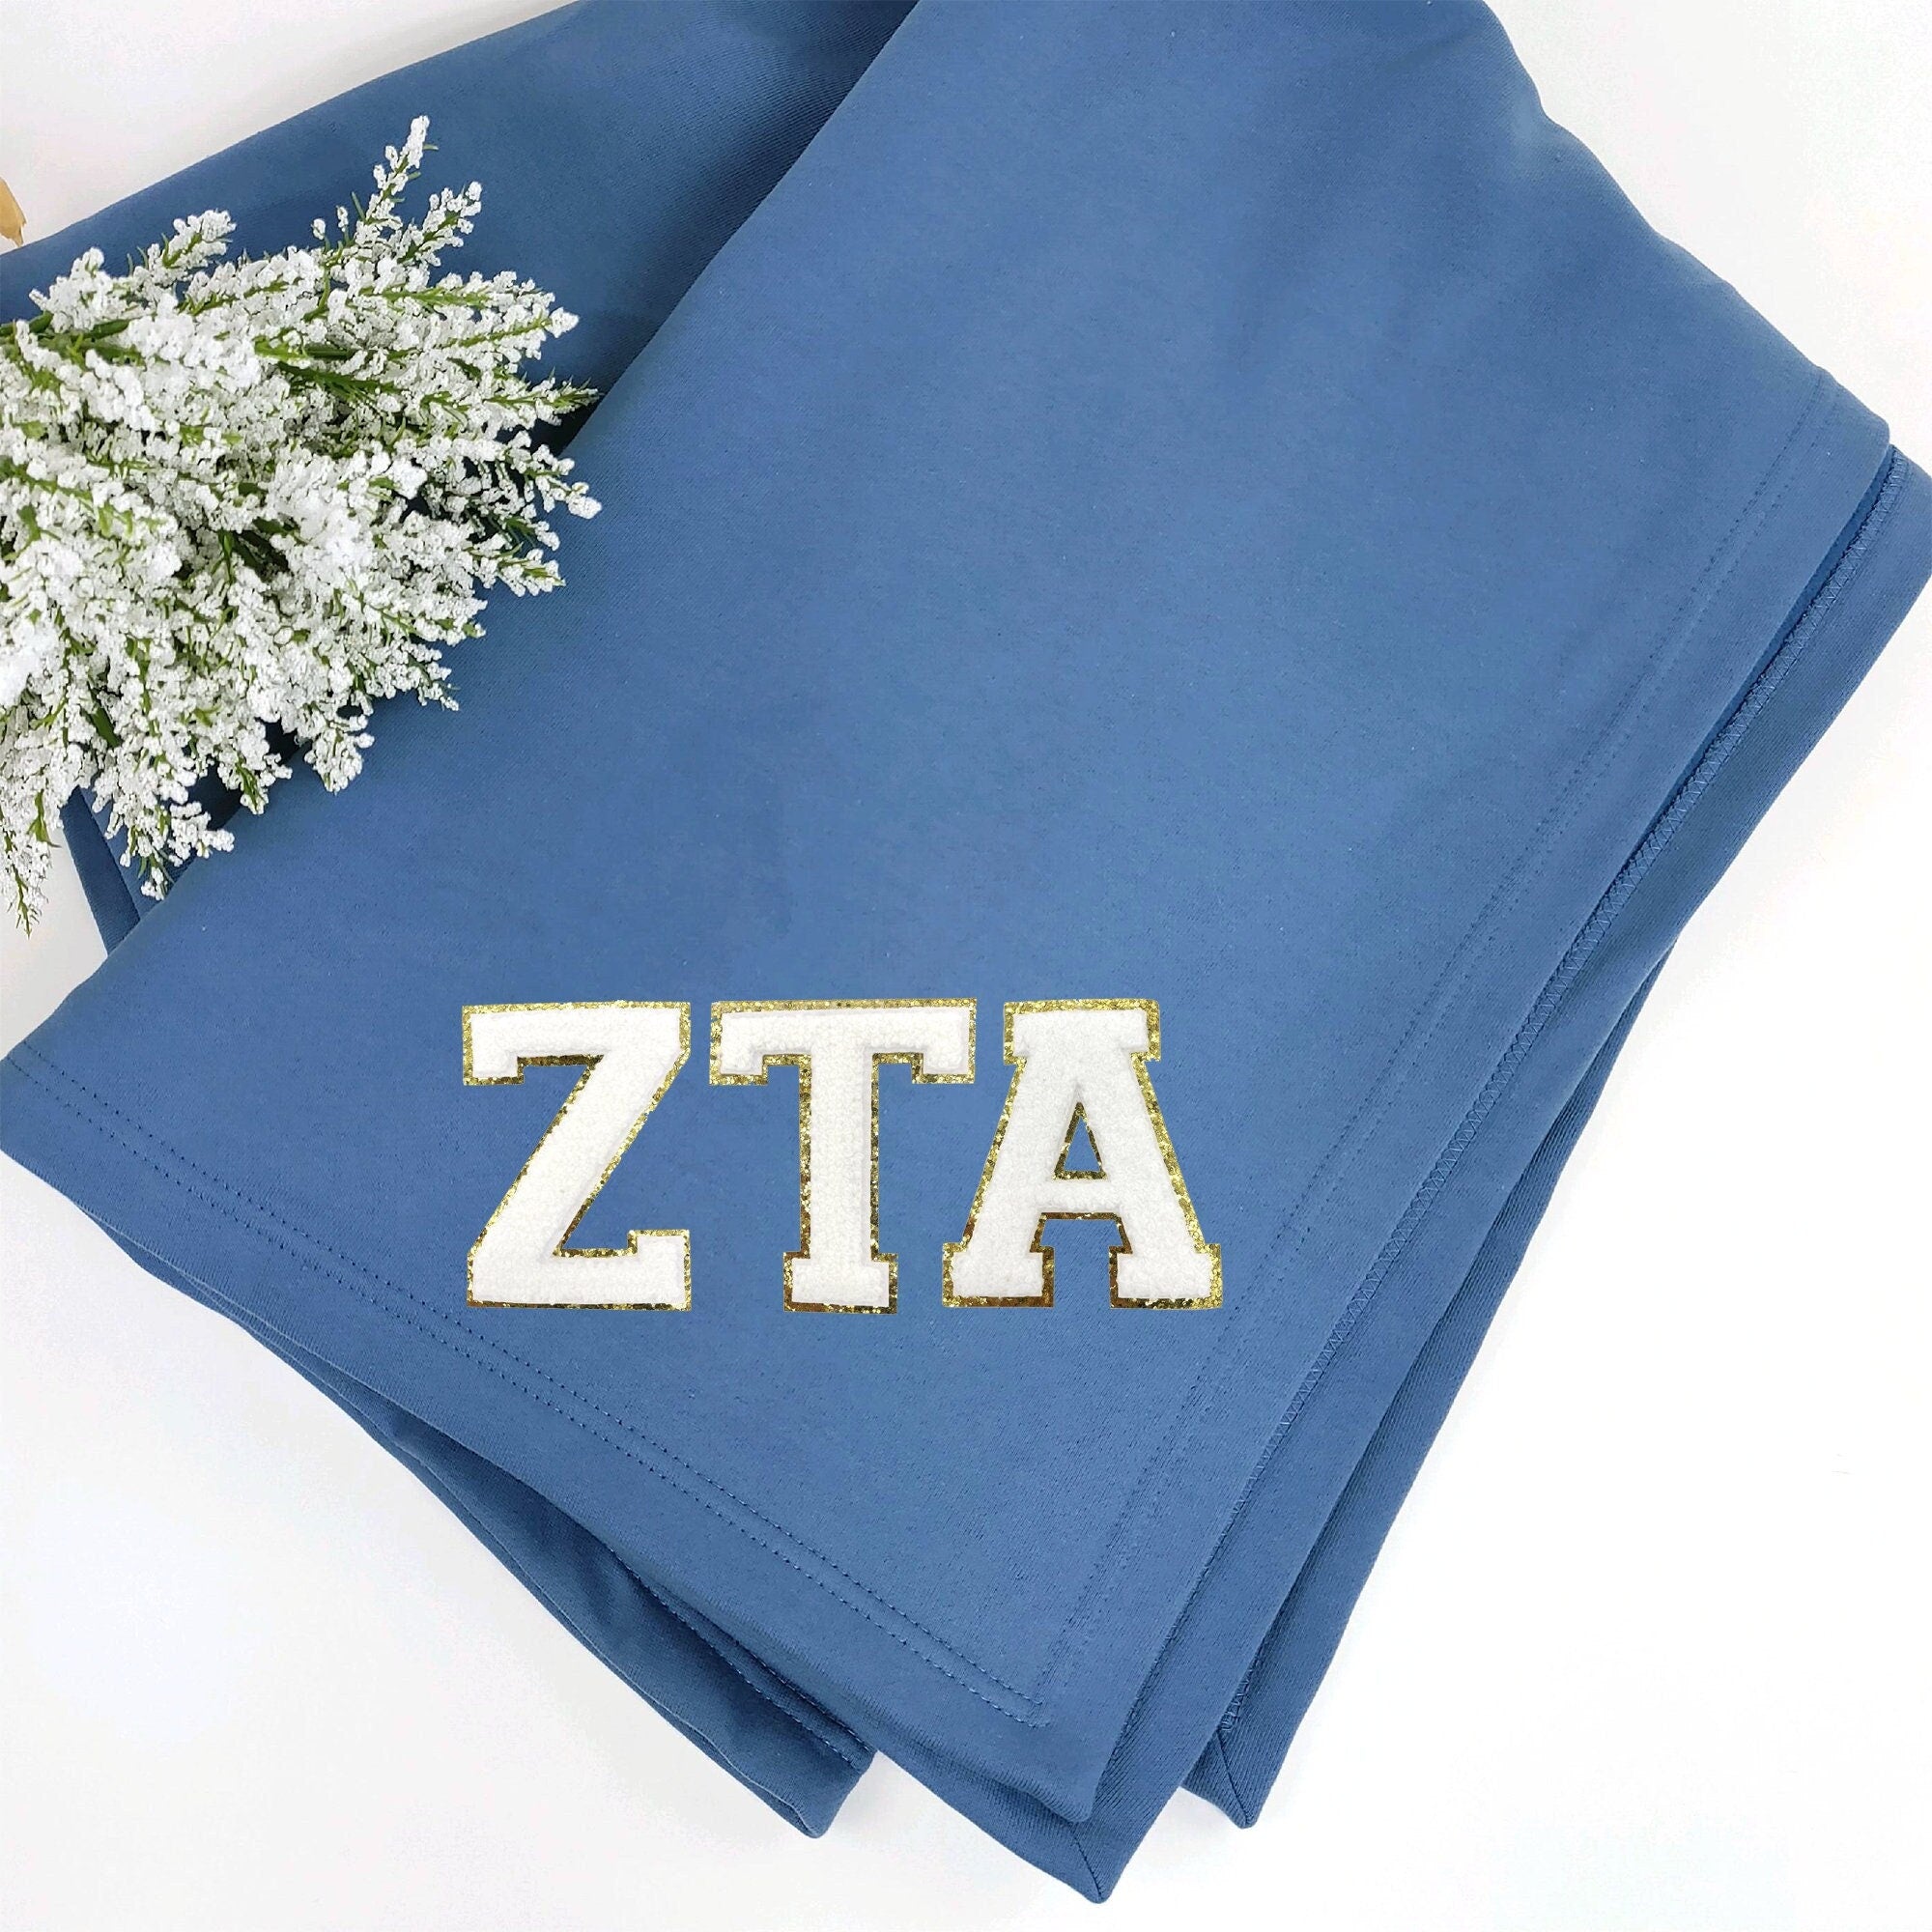 Zeta Tau Alpha Patch Sweatshirt Blanket, Multiple Colors, Warm and Soft, Perfect Sorority Gift